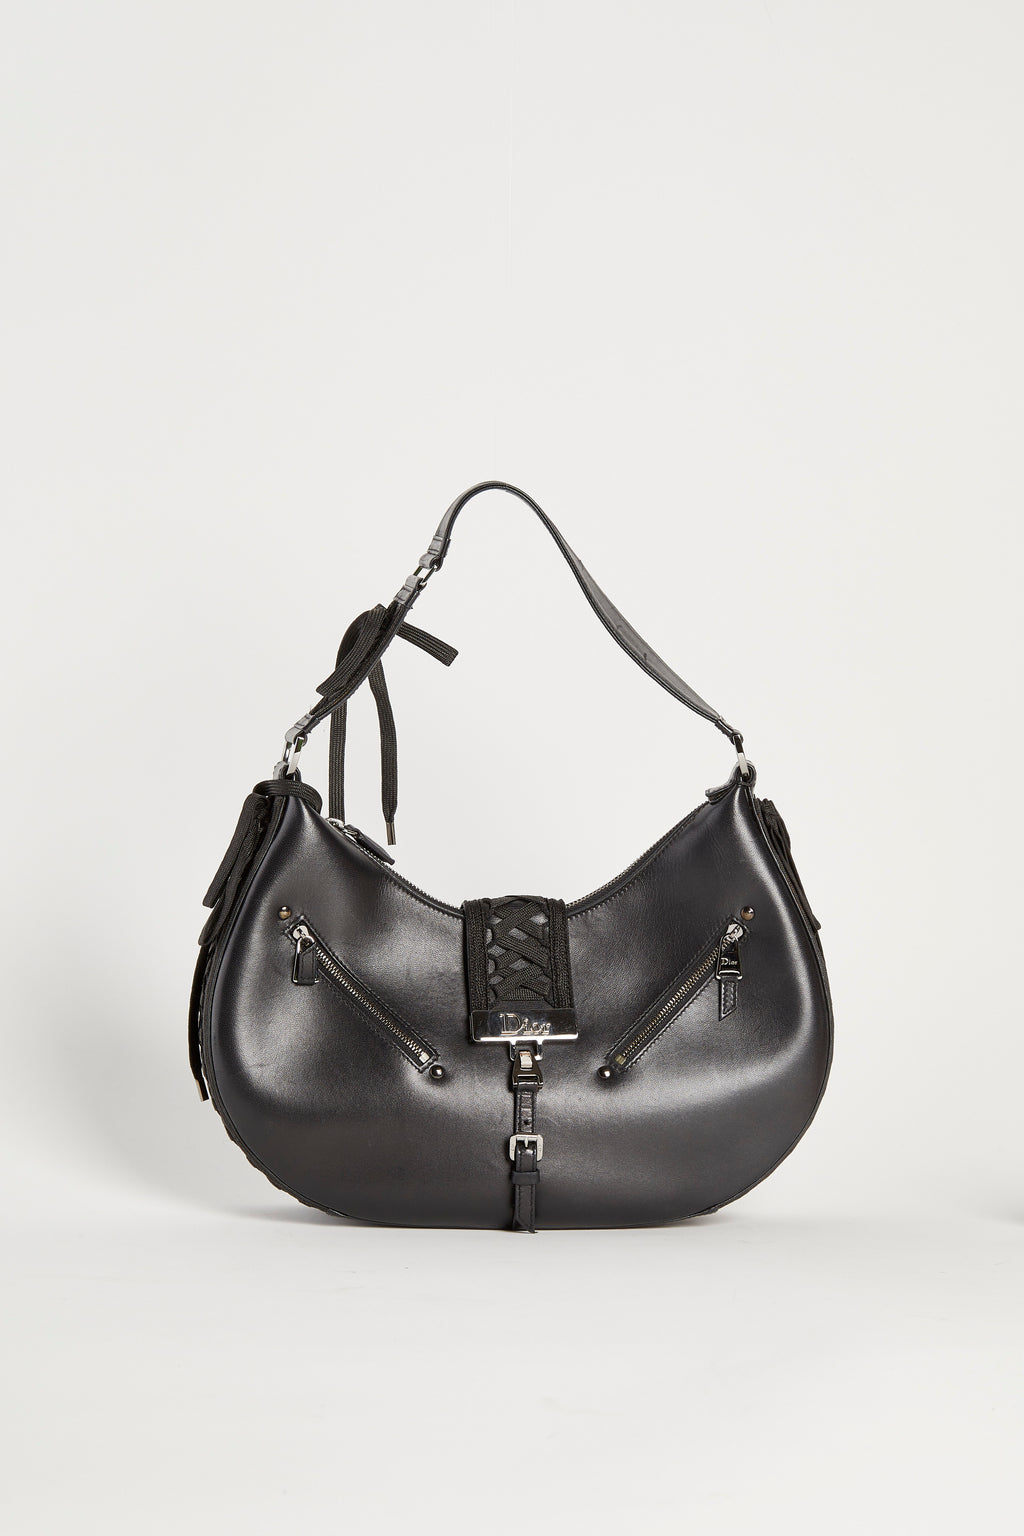 RARE Christian Dior Galliano Black Corset Shoulder Bag